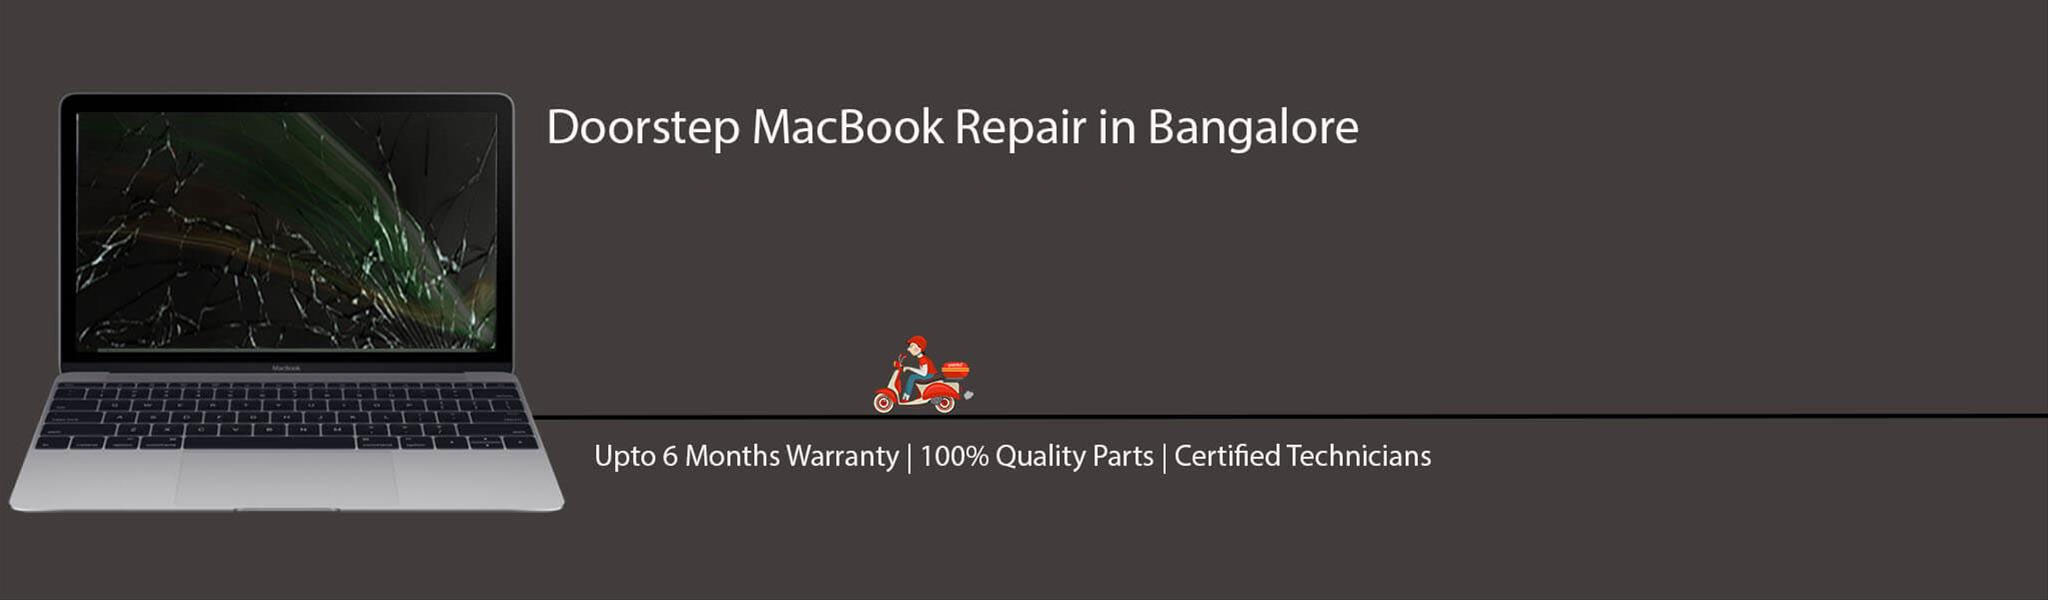 macbook-laptop-banner-bangalore.jpg